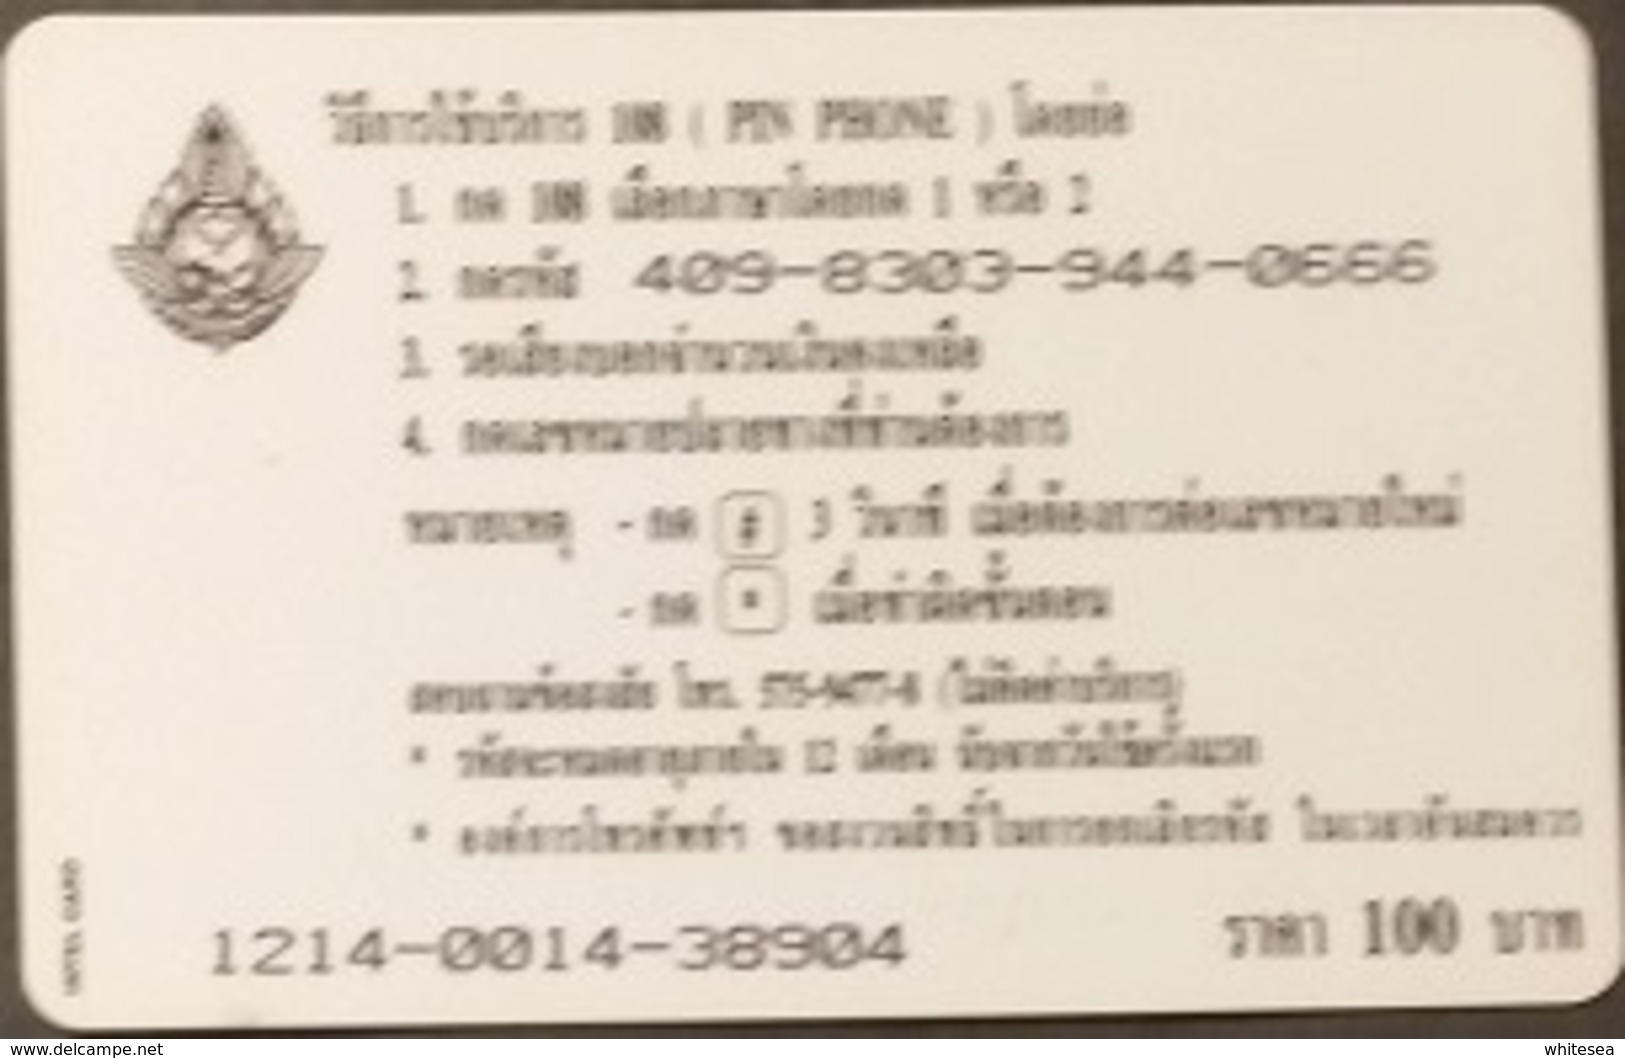 Prepaidcard Thailand - Pin Phone 108 - Sport - Asian Games Bangkok 1998 - Elefant - Thaïland